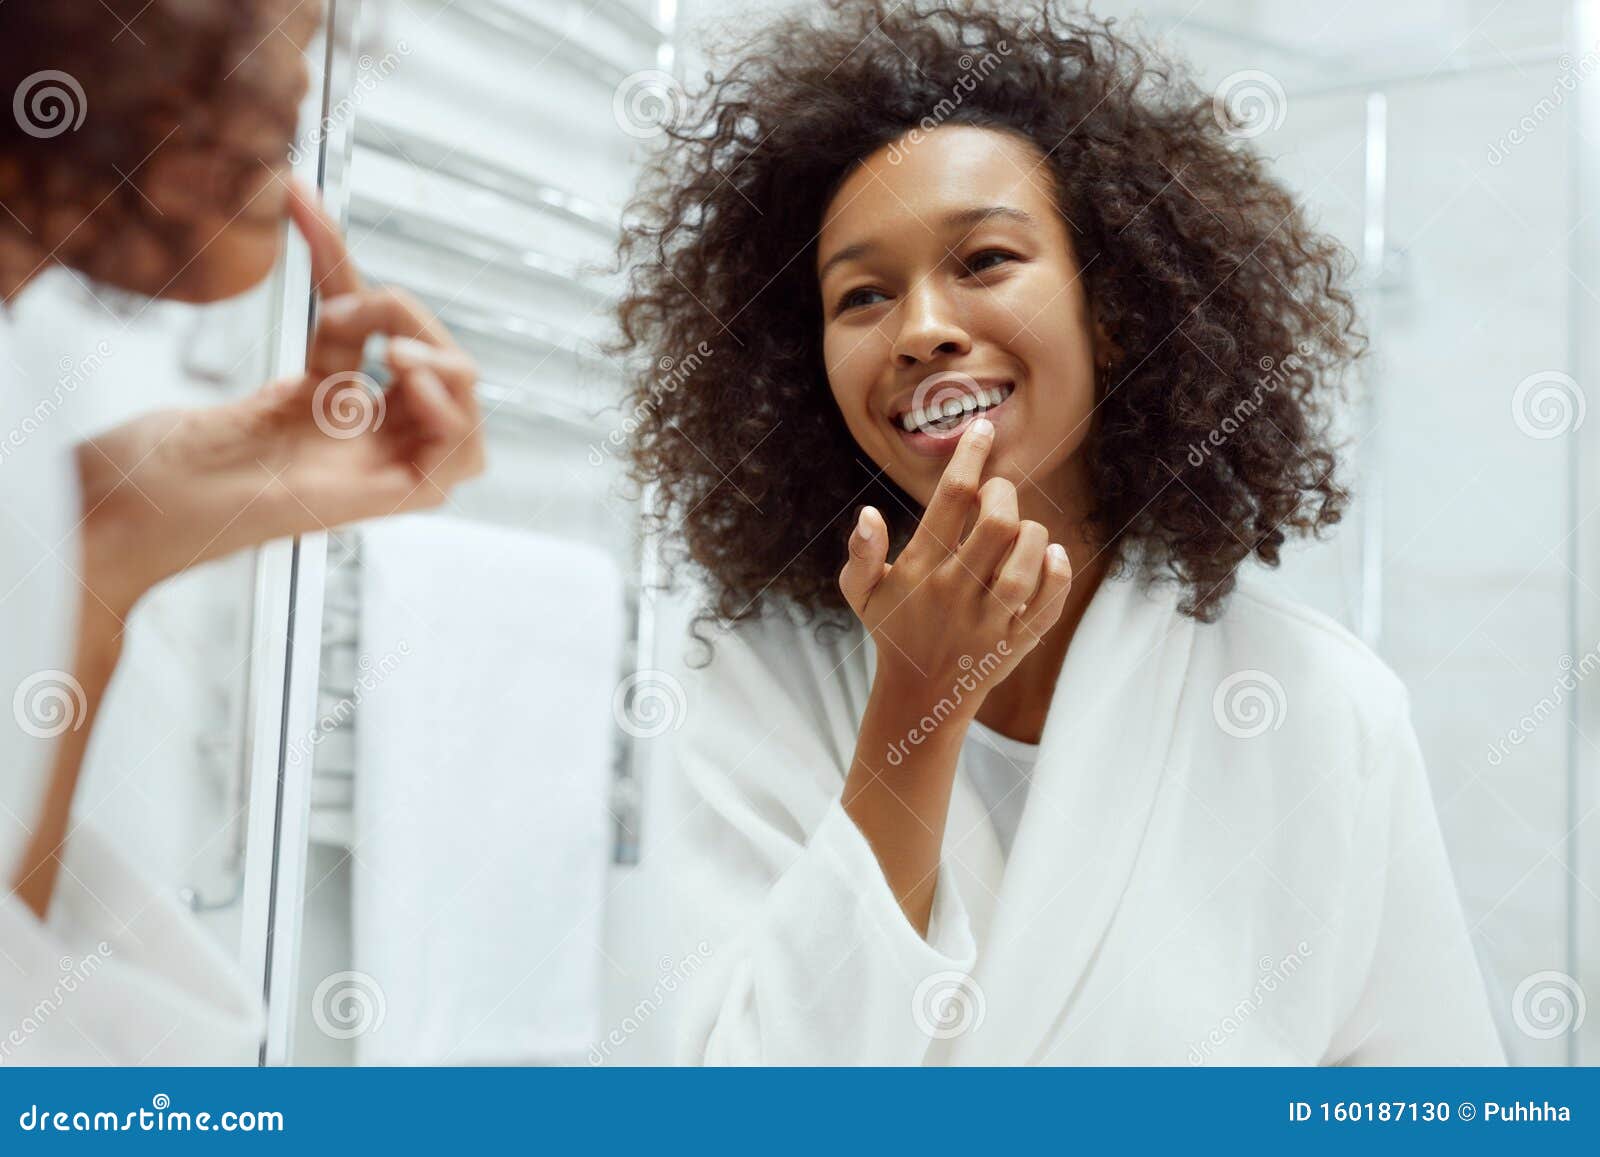 lips skin care. woman applying lip balm in bathroom portrait